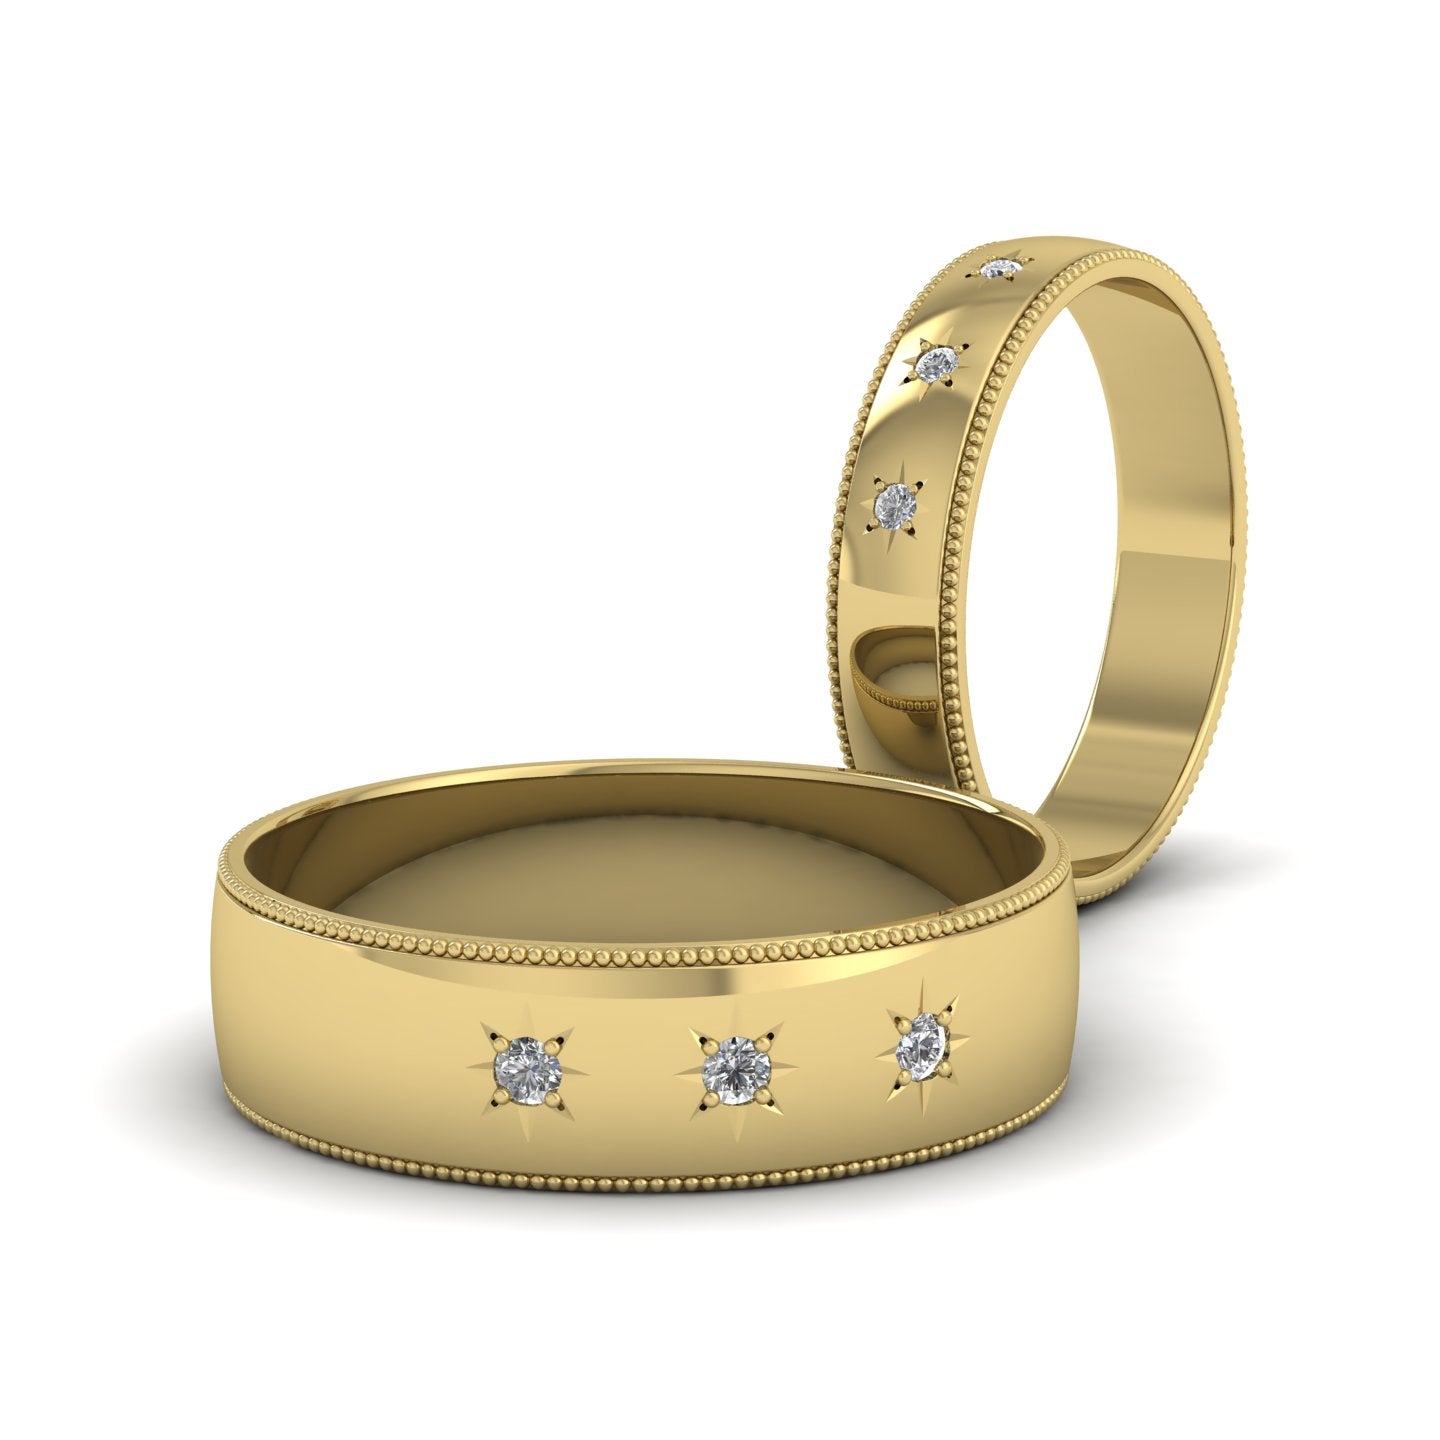 Millgrained Edge And Three Star Diamond Set 9ct Yellow Gold 4mm Wedding Ring